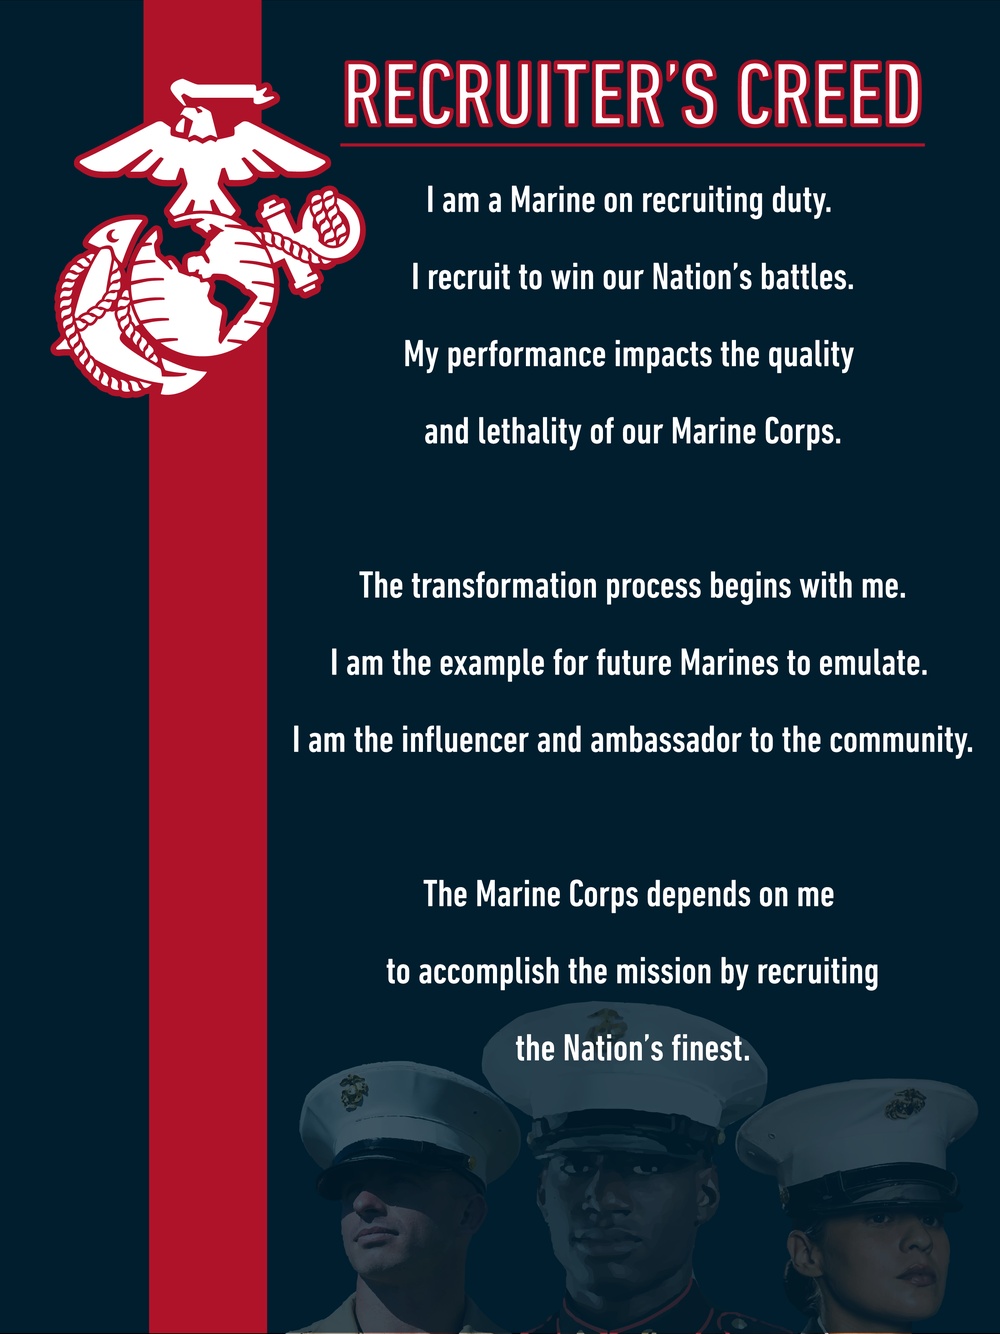 The Marine Recruiter's Creed